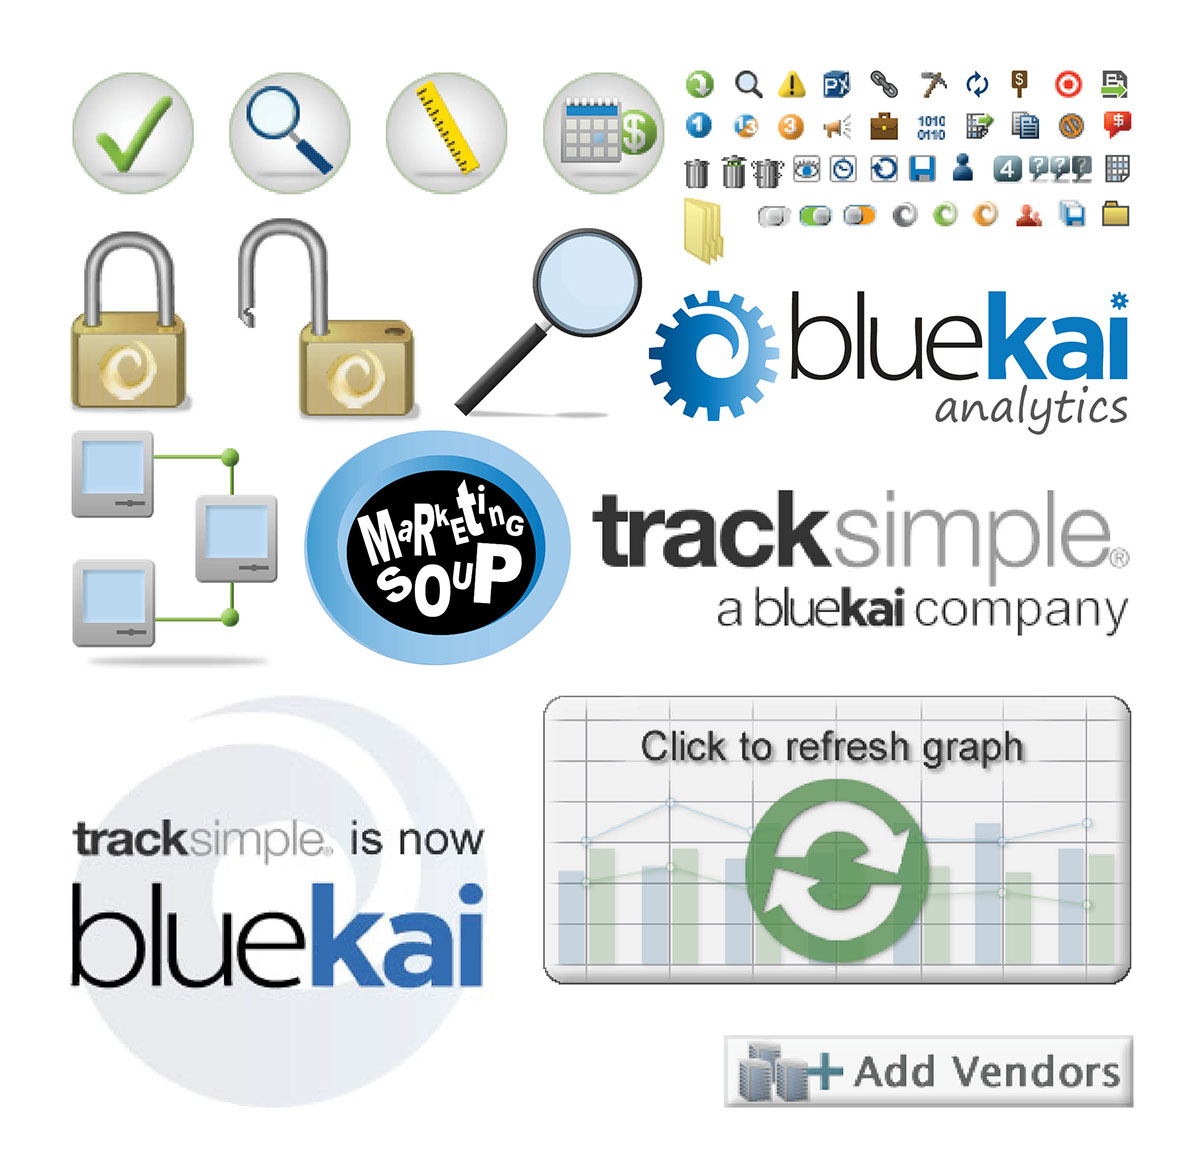 logo bluekai tracksimple icons buttons illustrations vector art